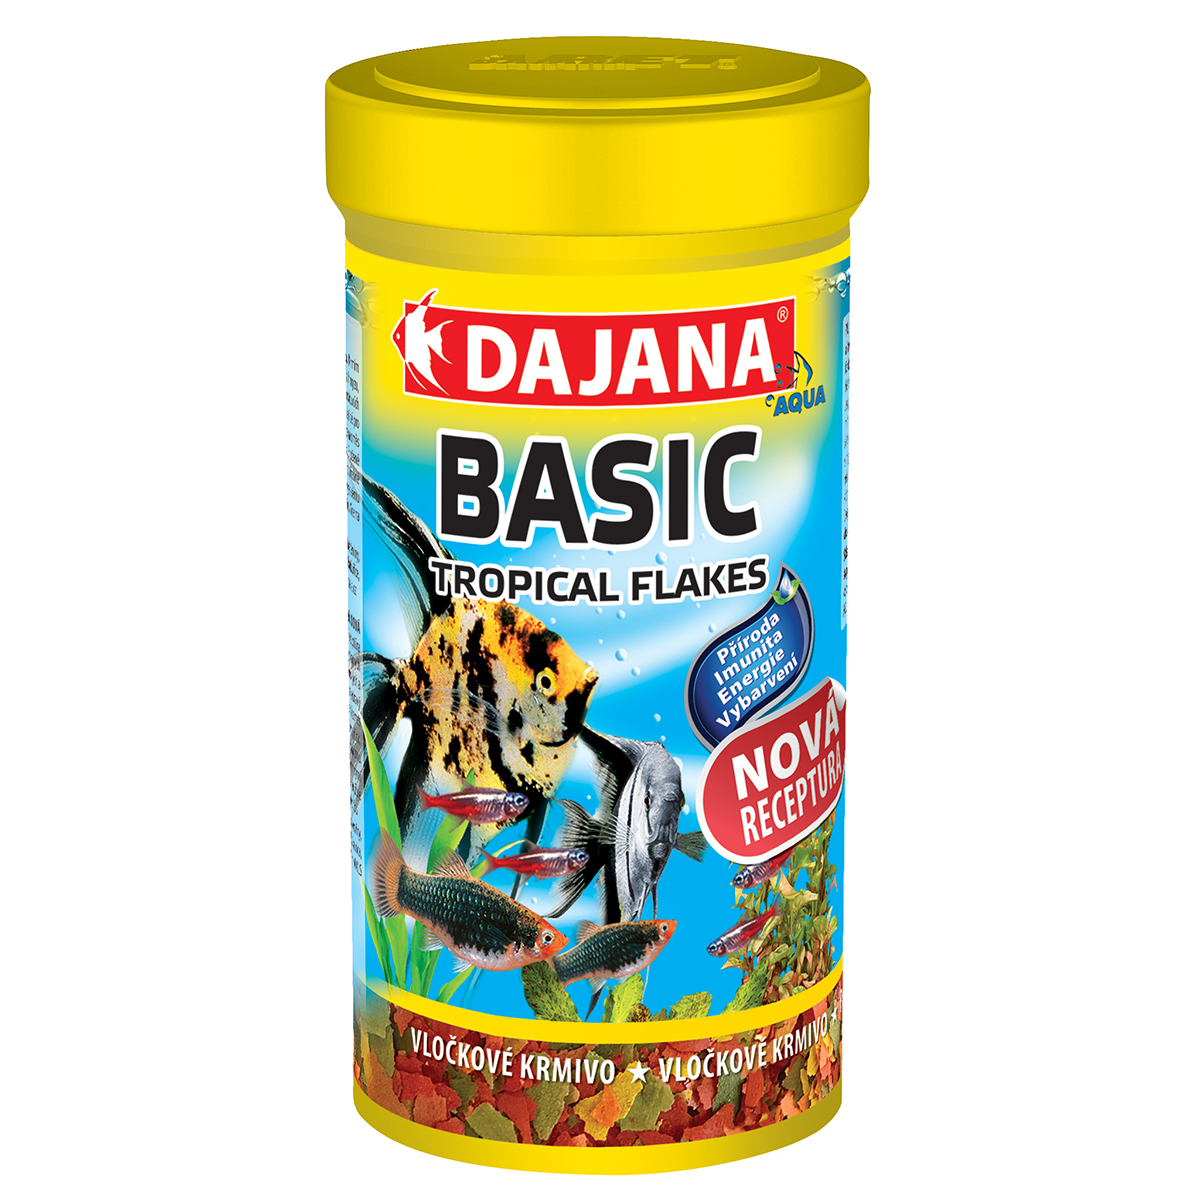 BASIC-Tropical-flakes